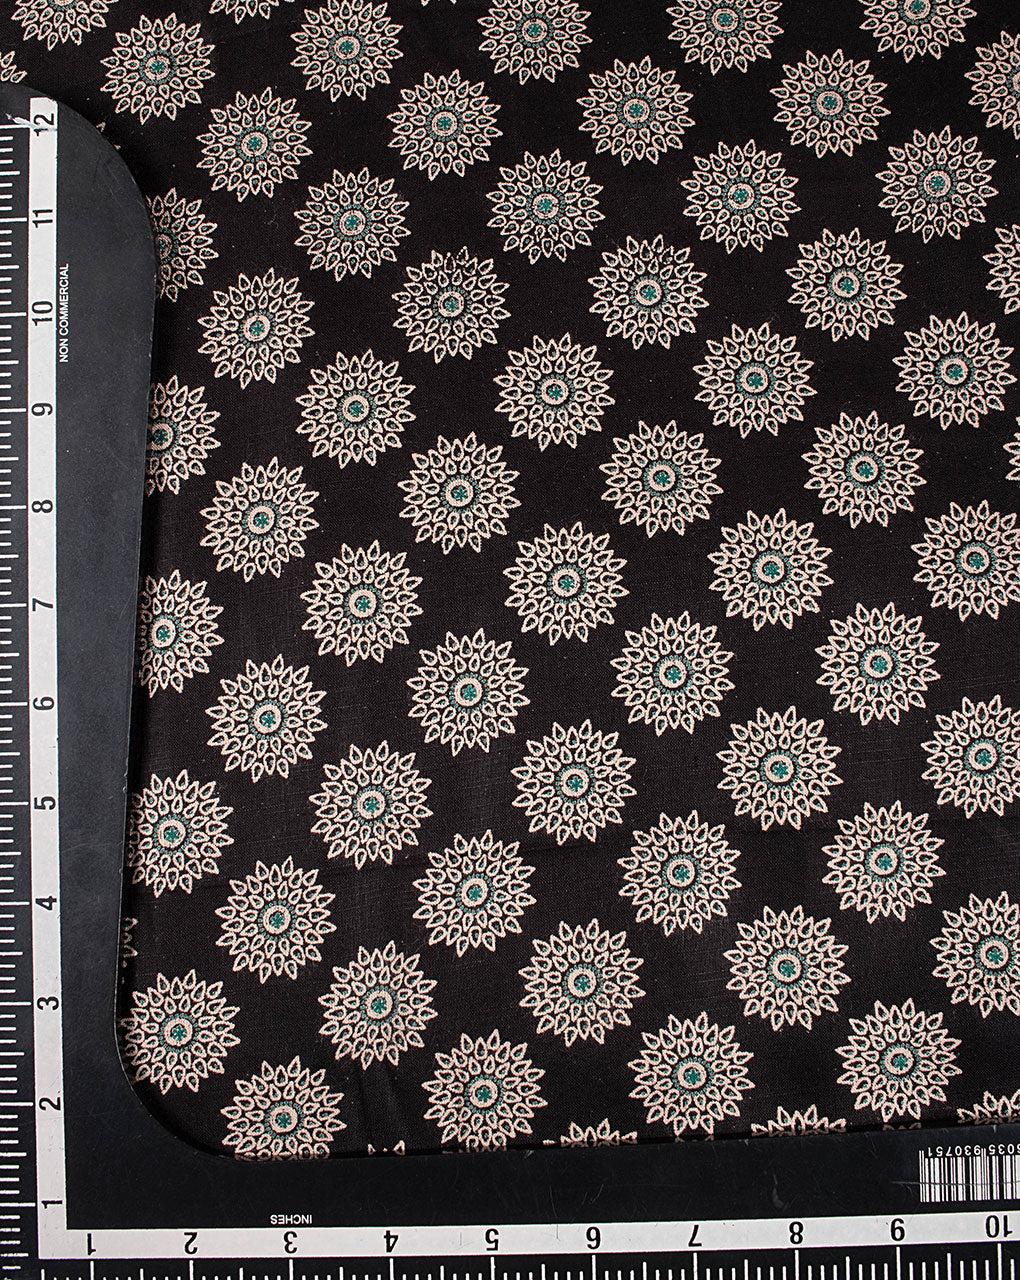 Screen Print Slub Rayon Fabric - Fabriclore.com